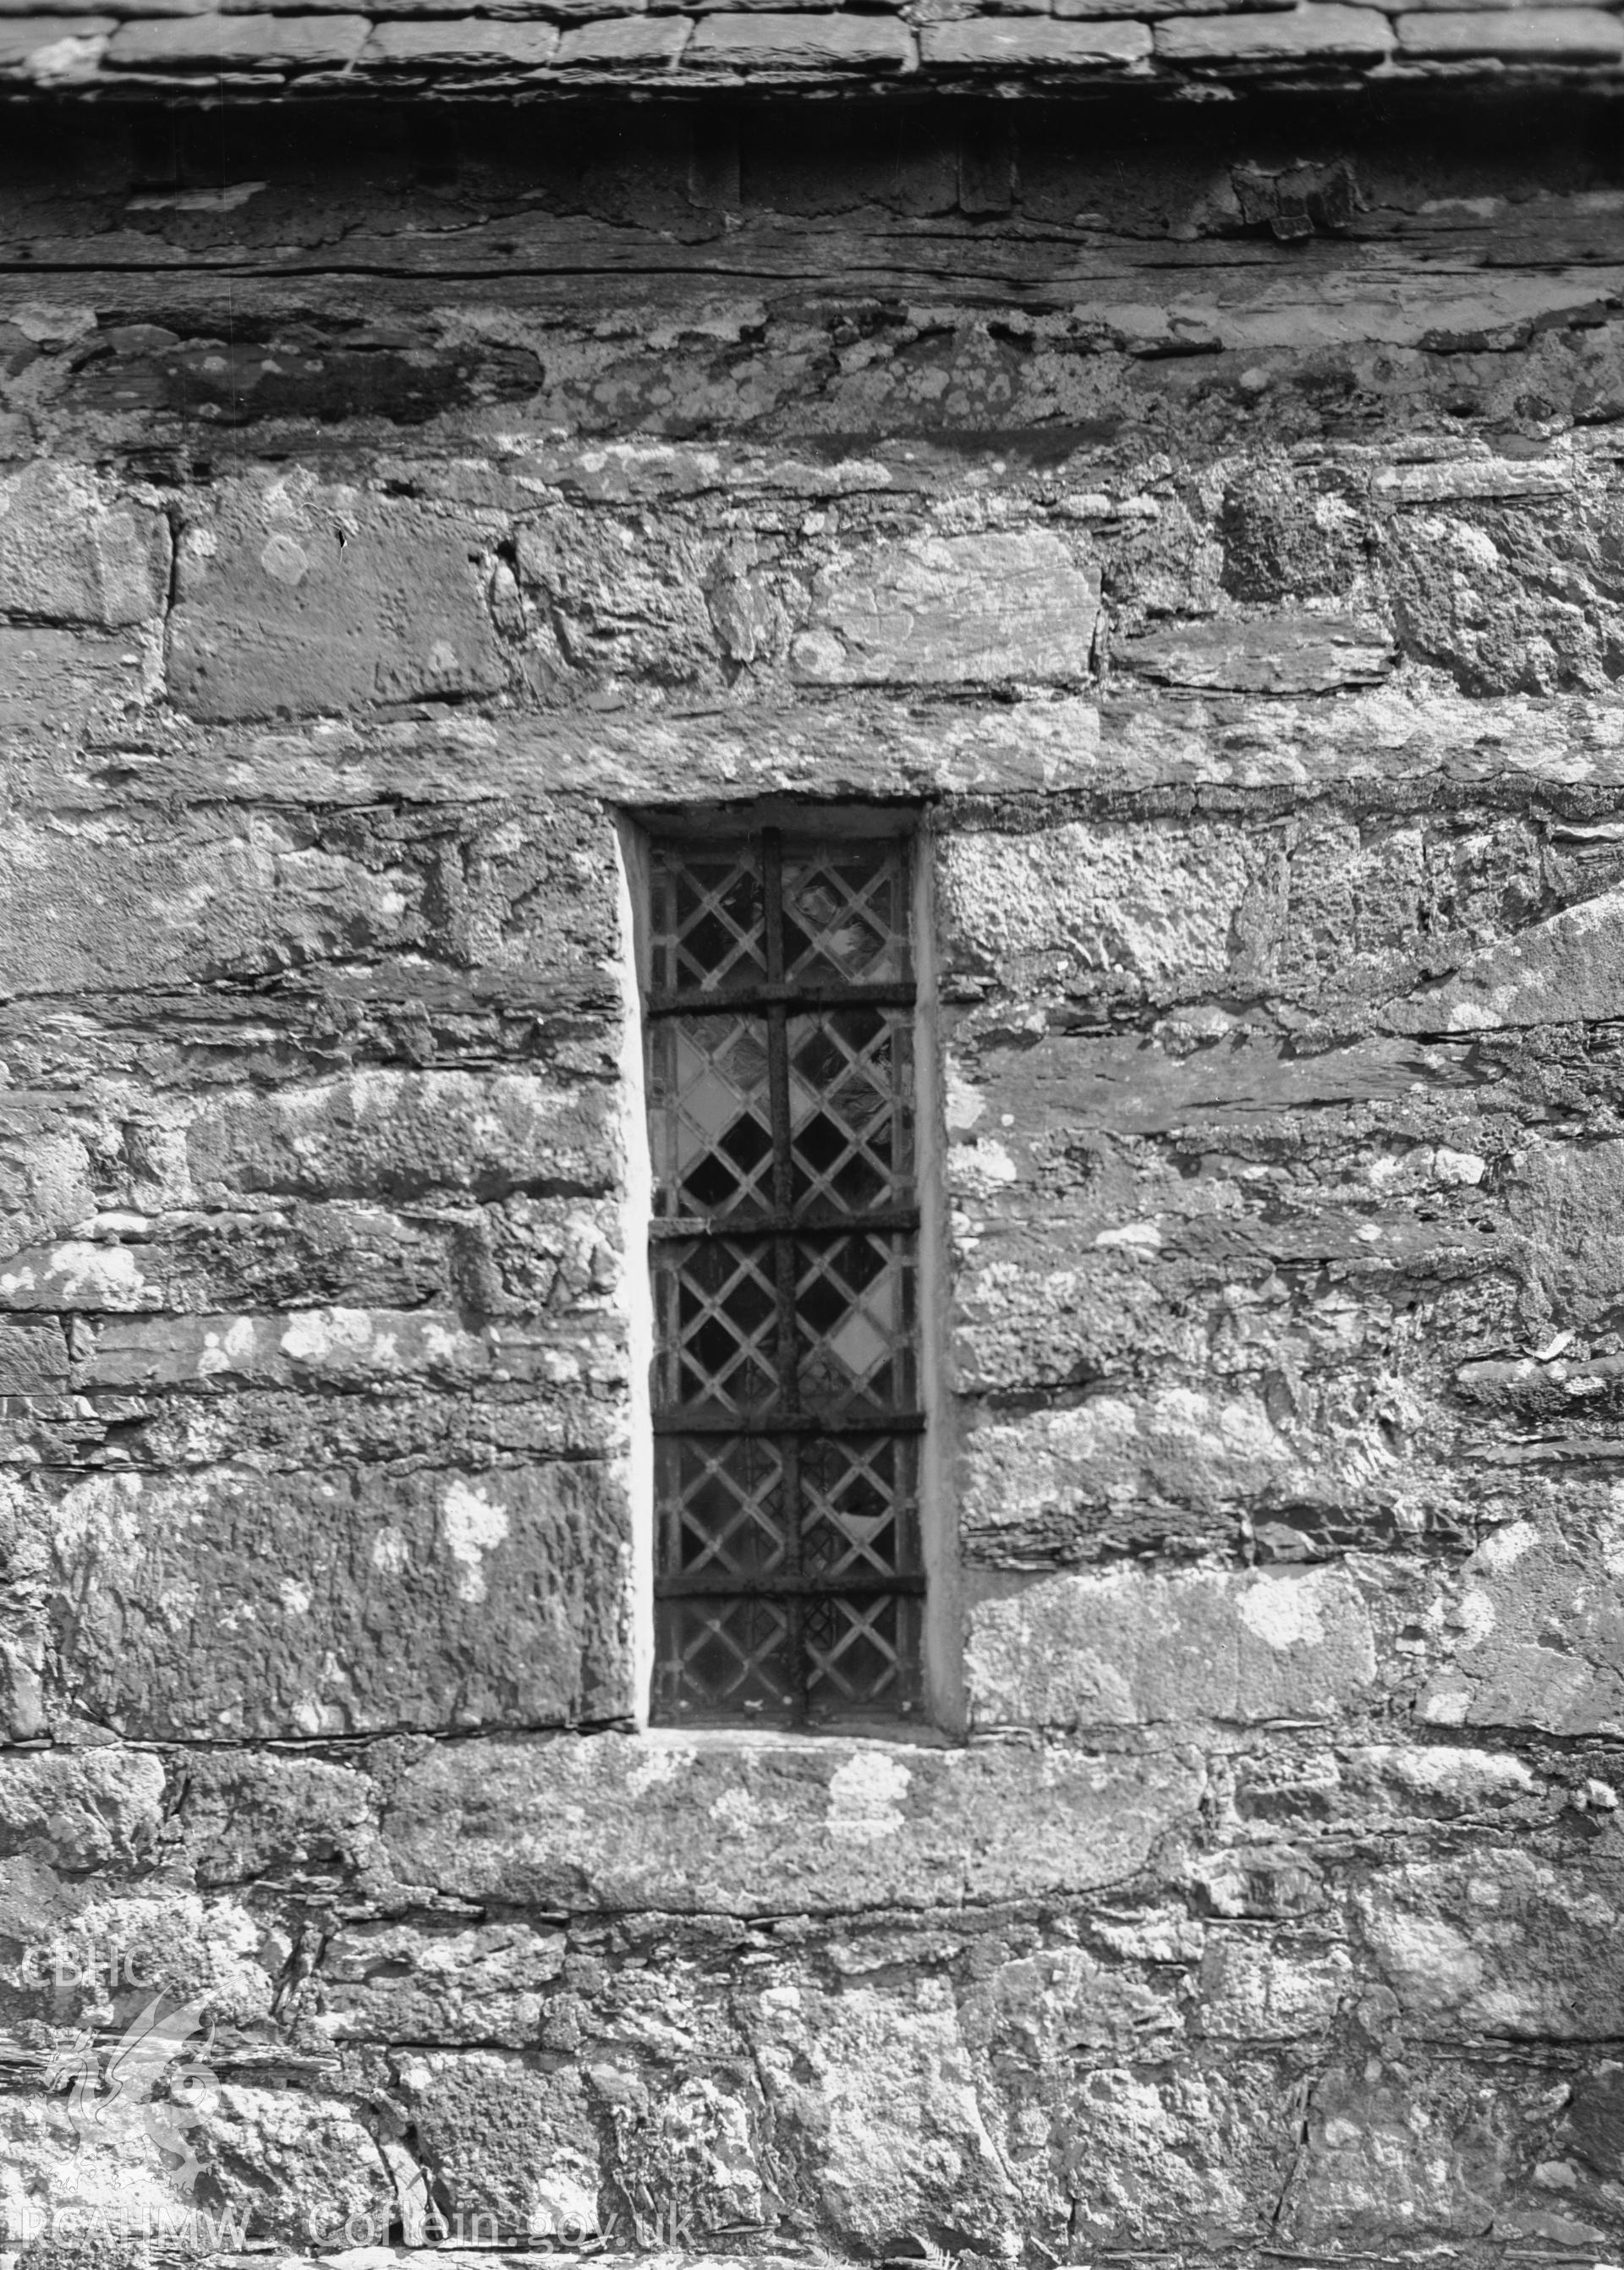 Exterior view of window at St Brothen's Church, Llanfrothen taken 07.06.1941.